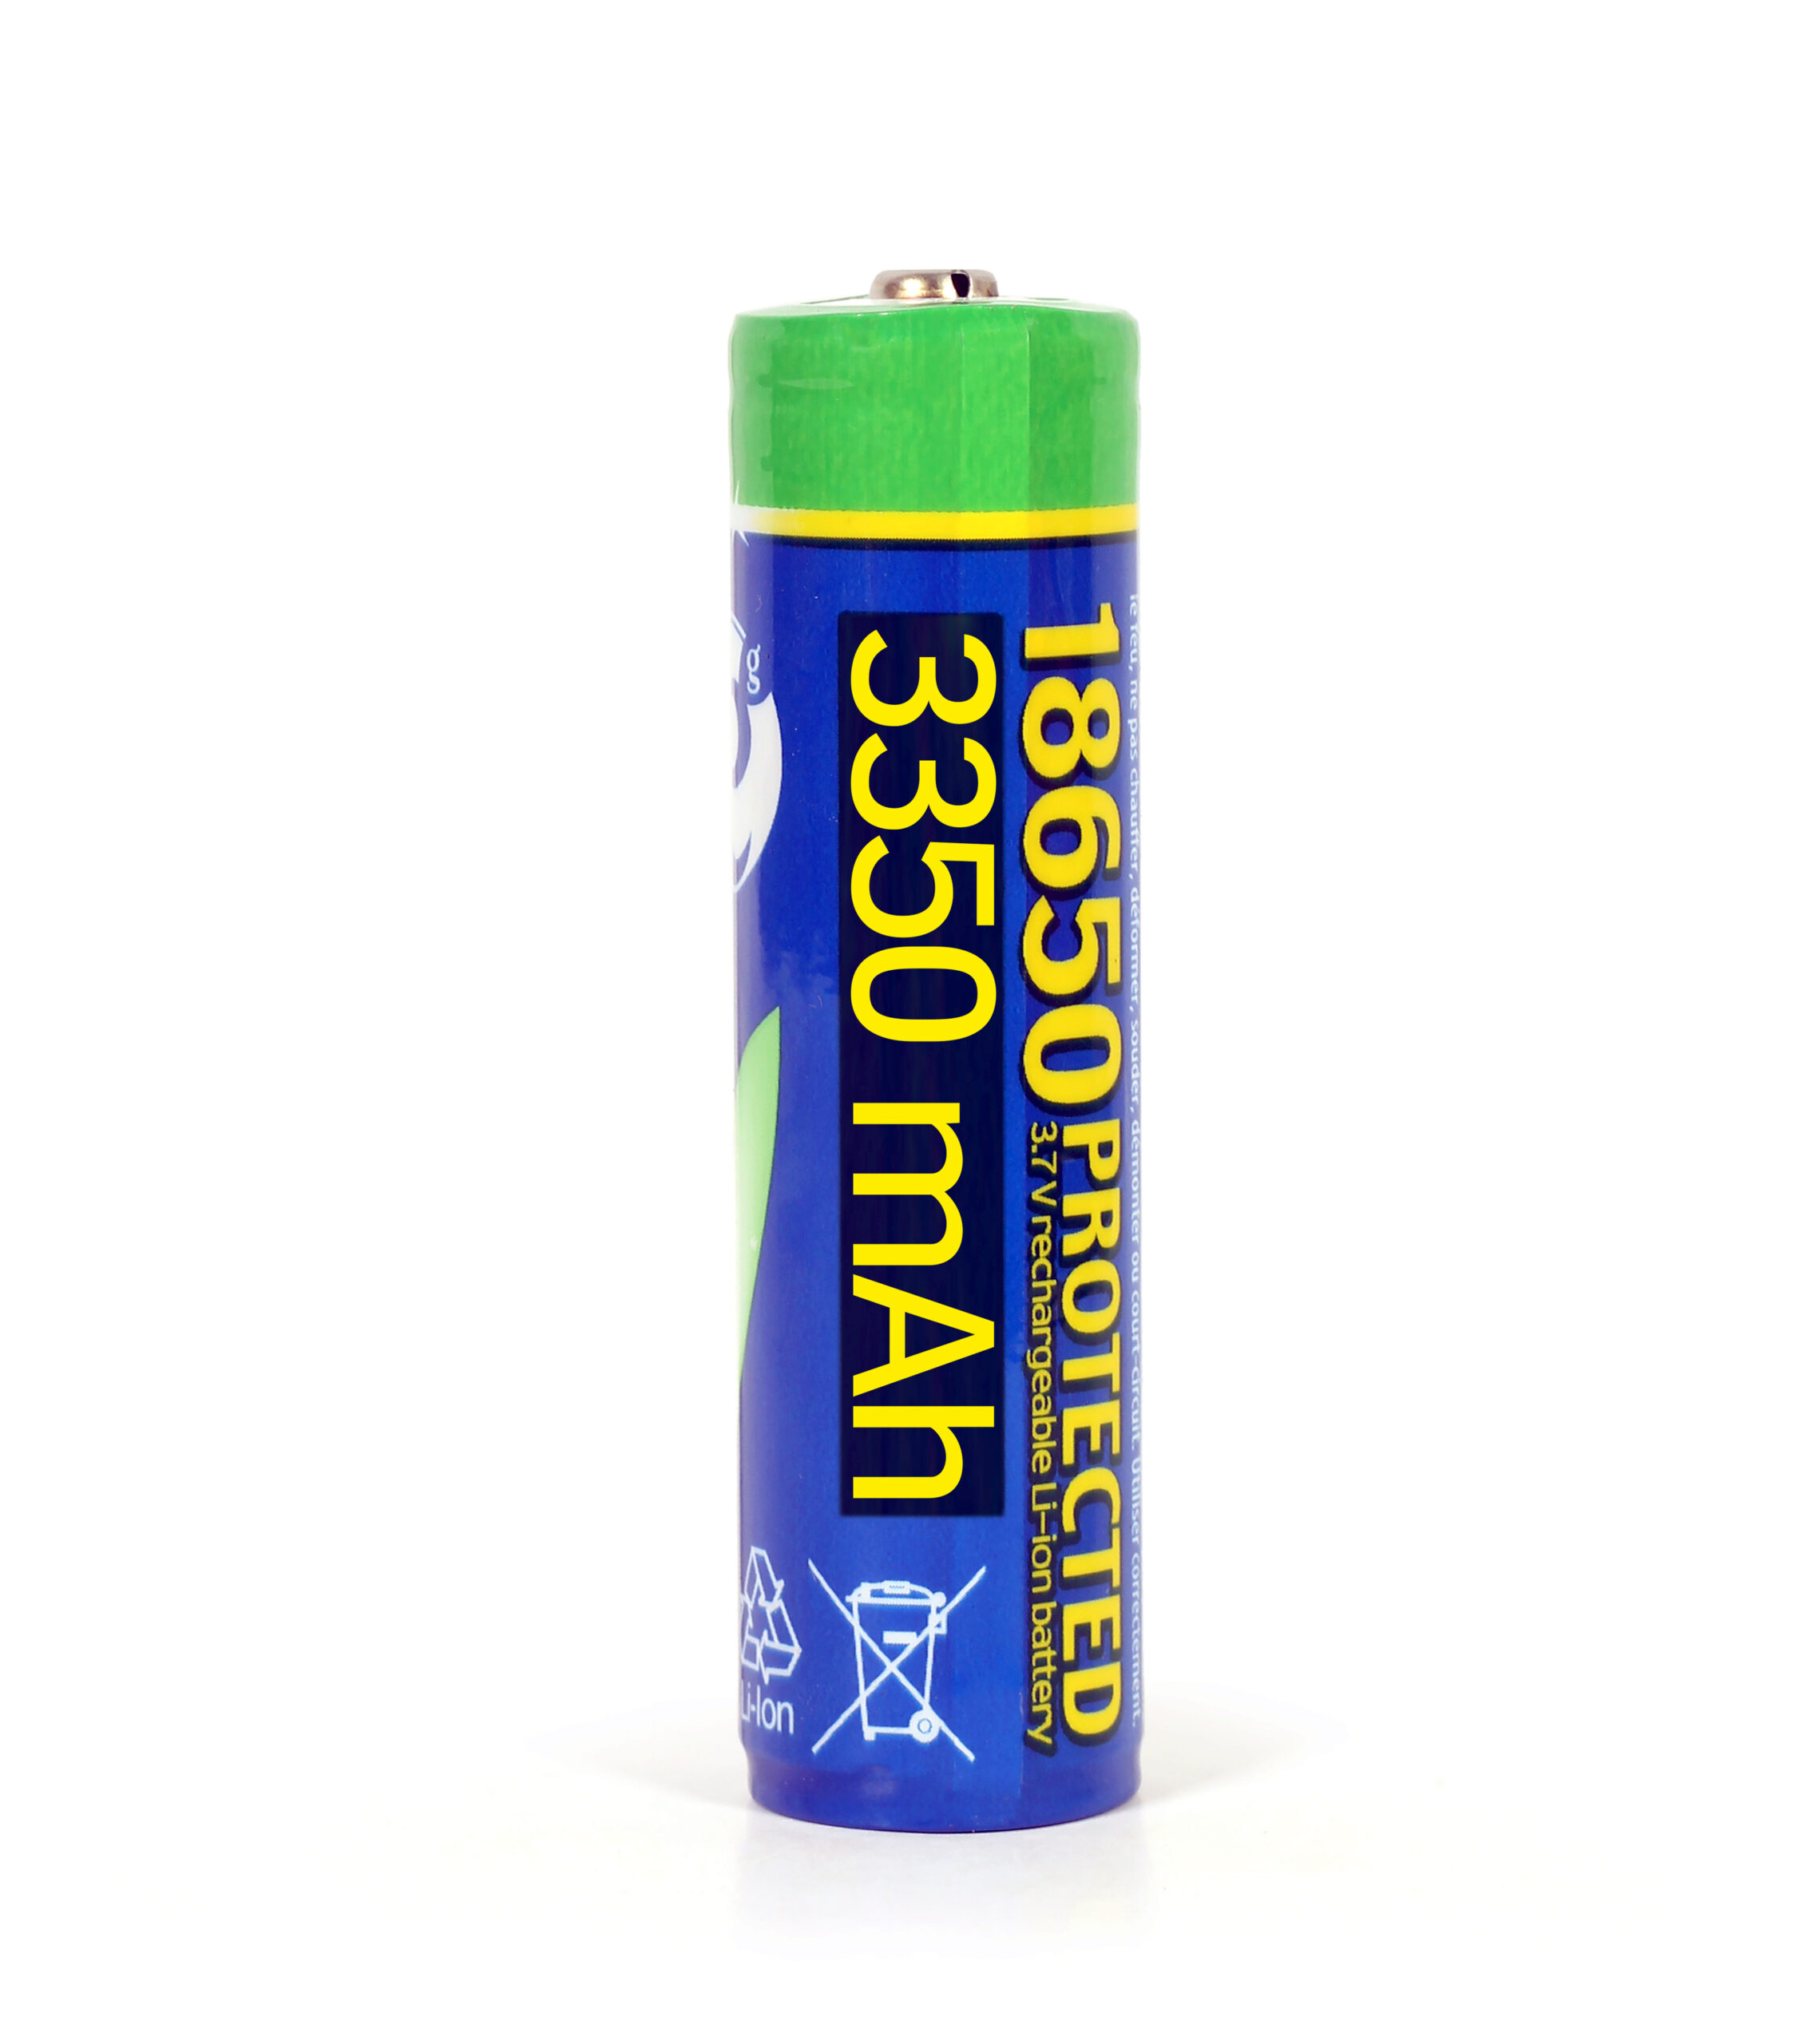 Lithium-ion 18650 batterij, beveiligd, 3350mAh